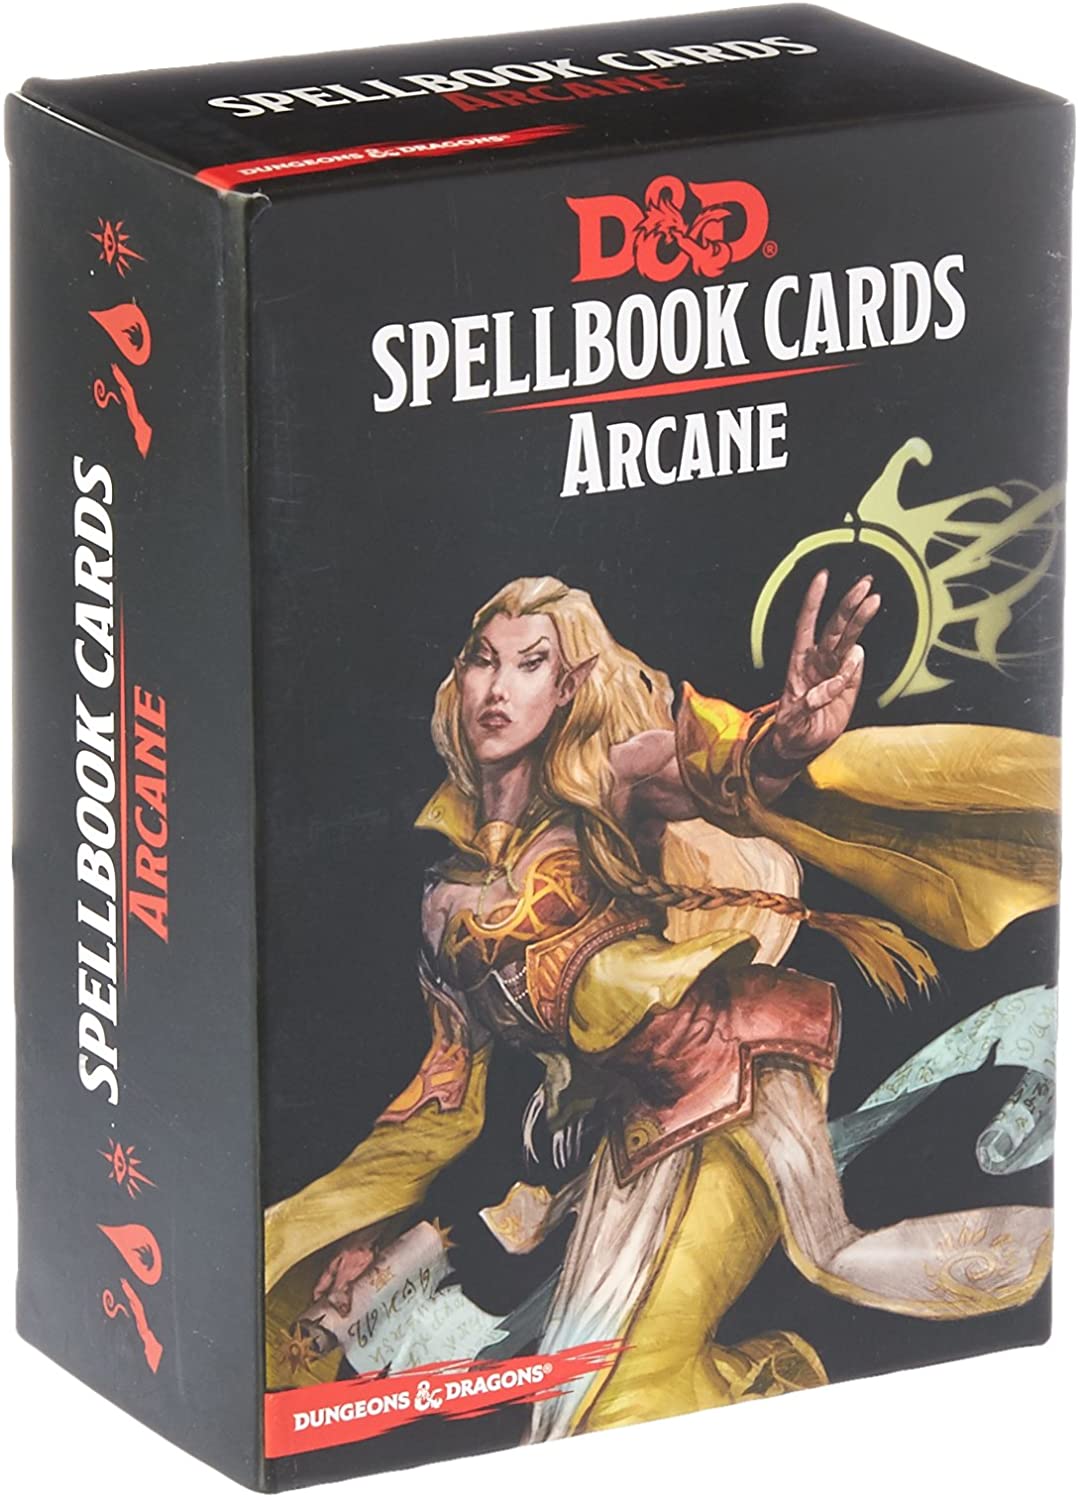 Dungeons & Dragons Spellbook Cards Arcane Deck